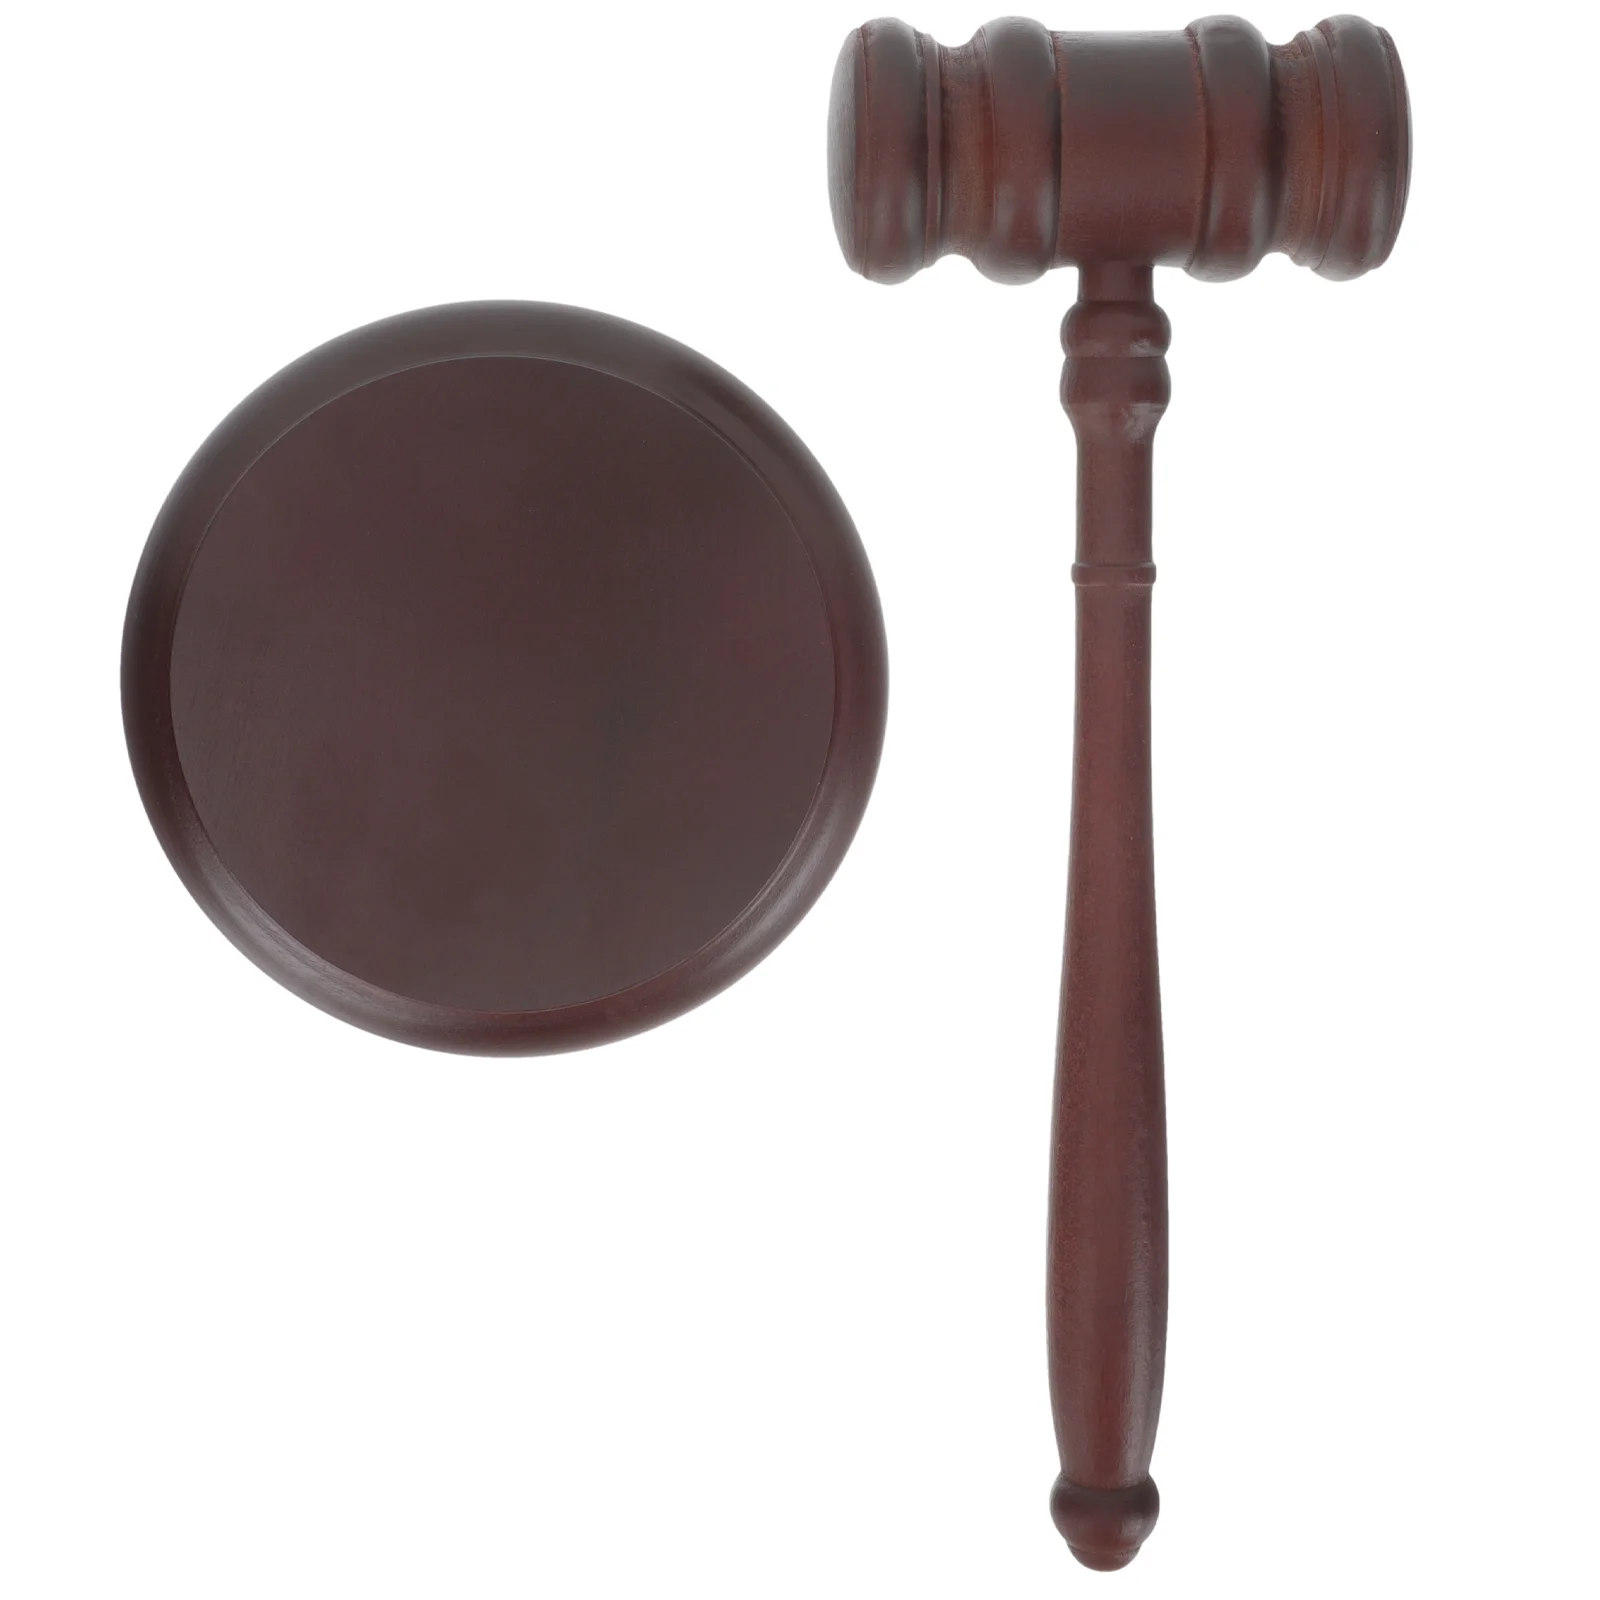 

1 Set of Plain Mallet With Round Base Novelty Courtroom Gavel Auction Hammer Court Hammer